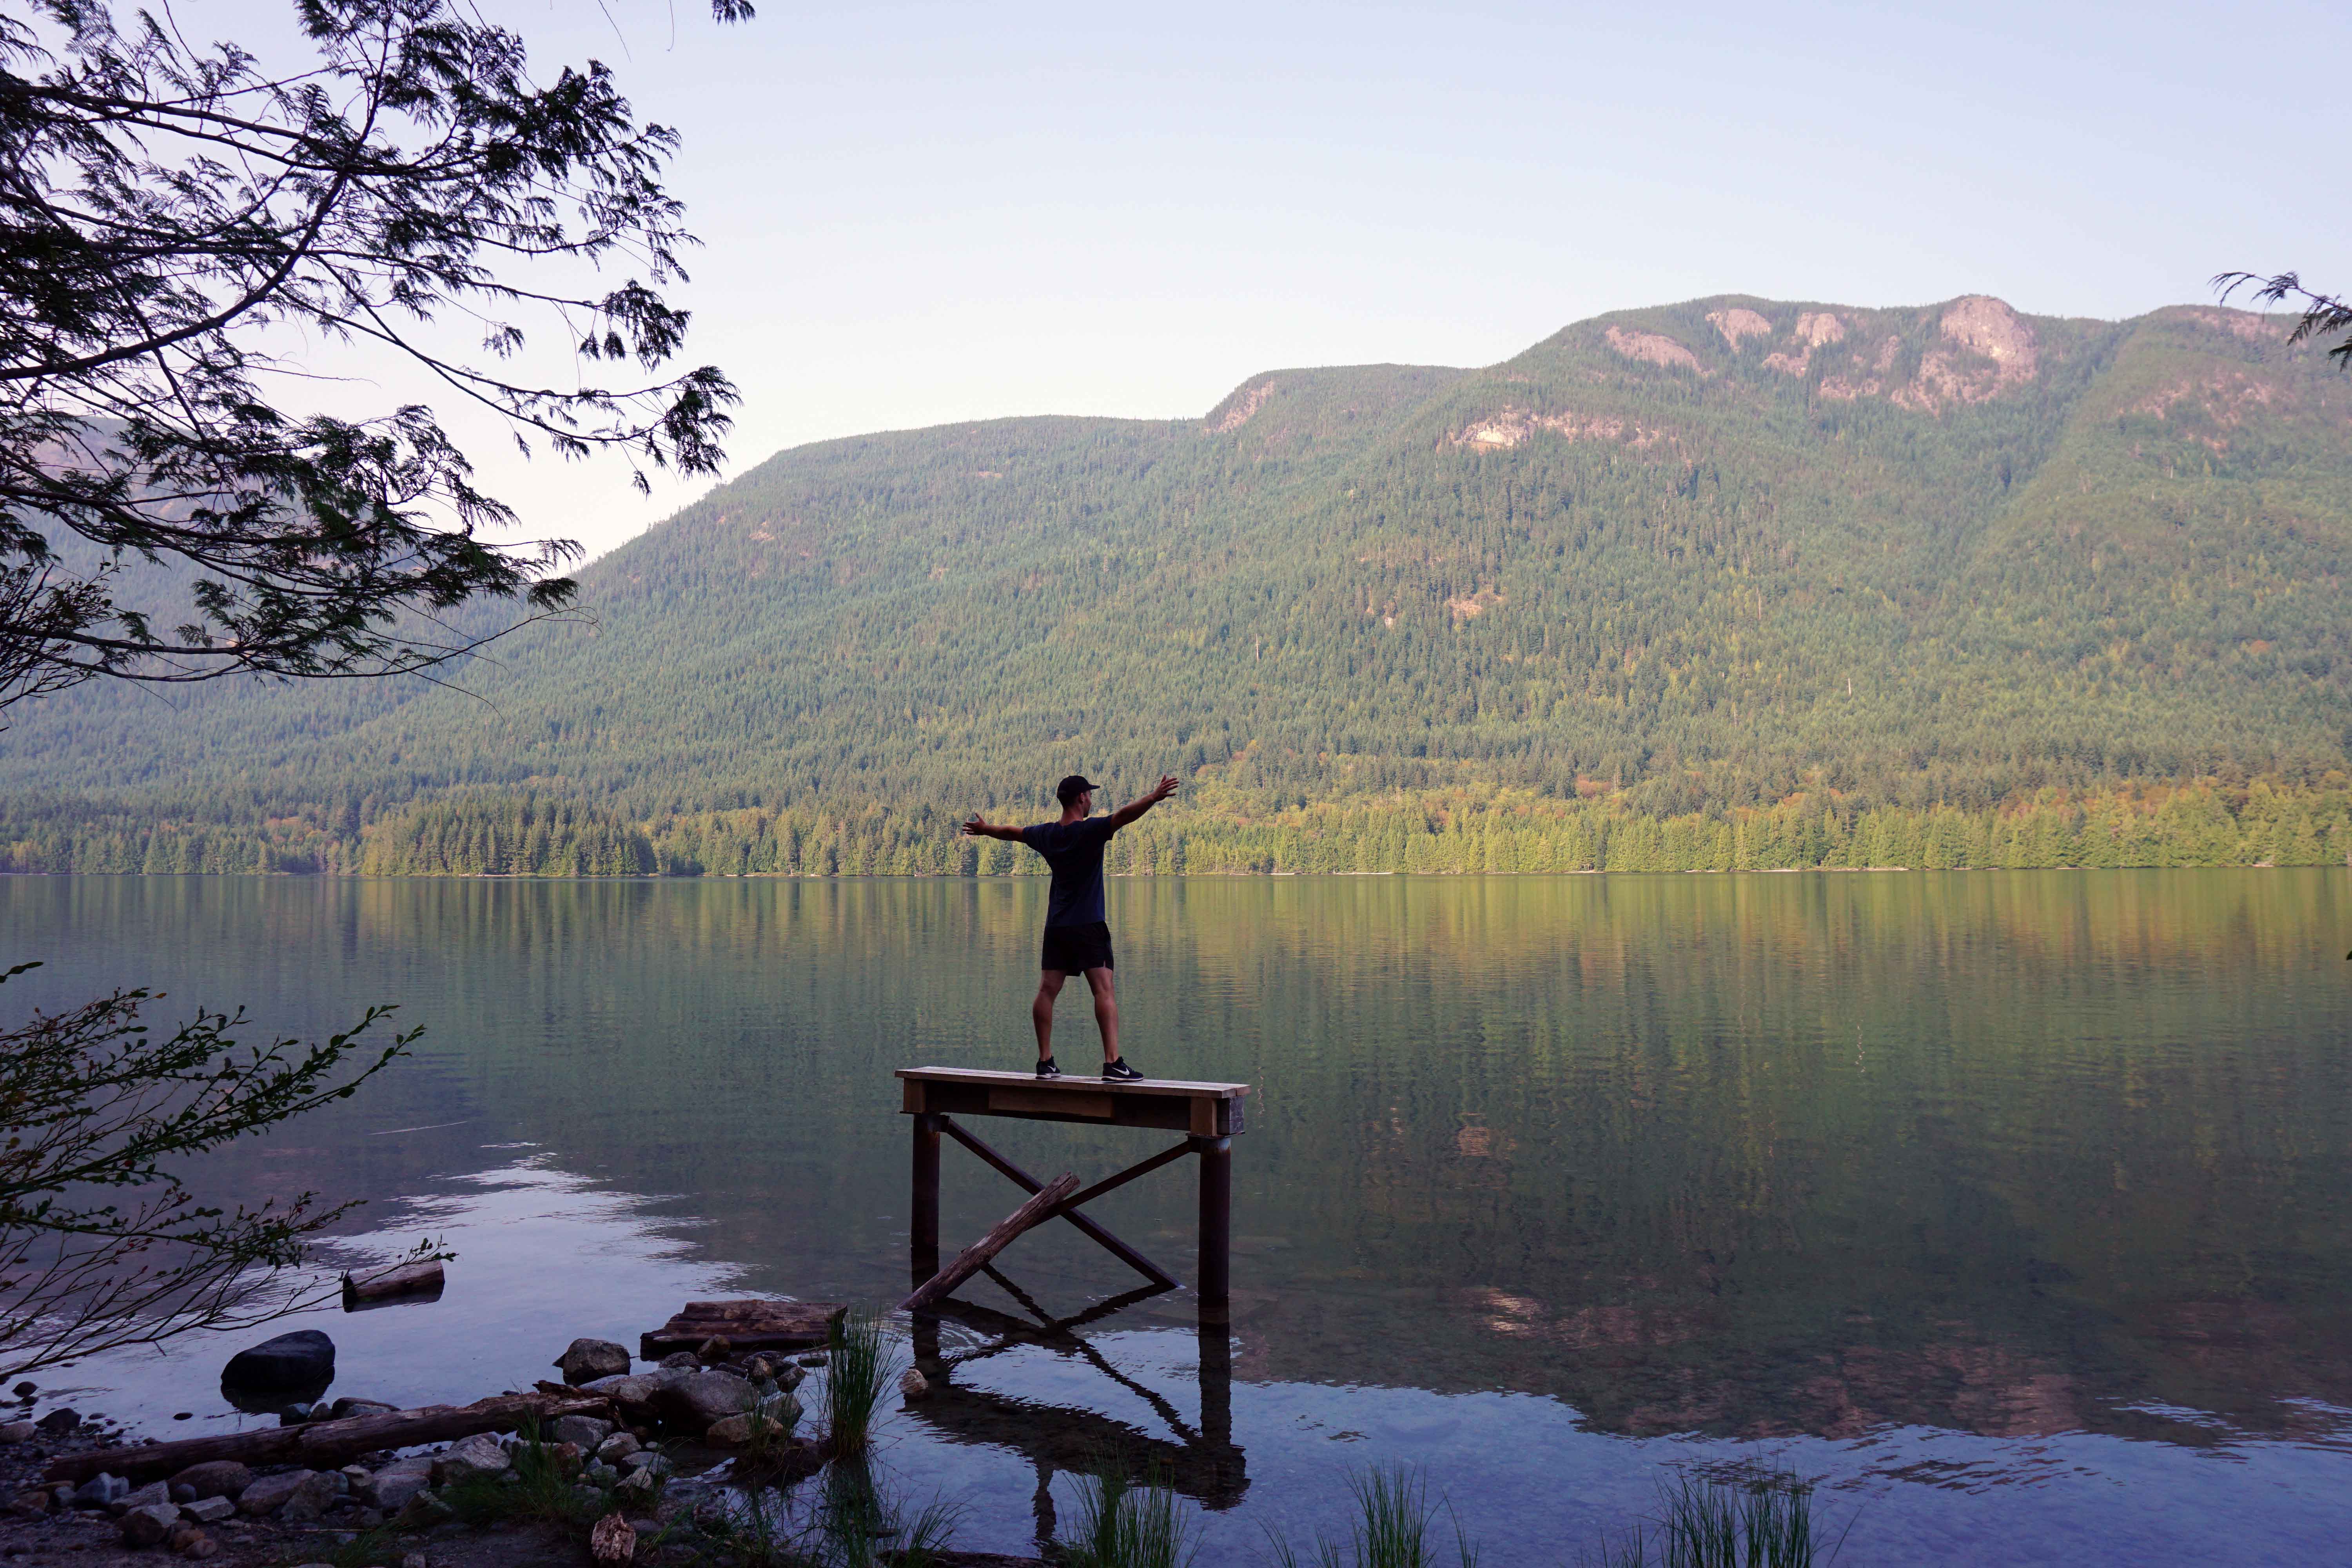 Man stands on wooden platform in lake